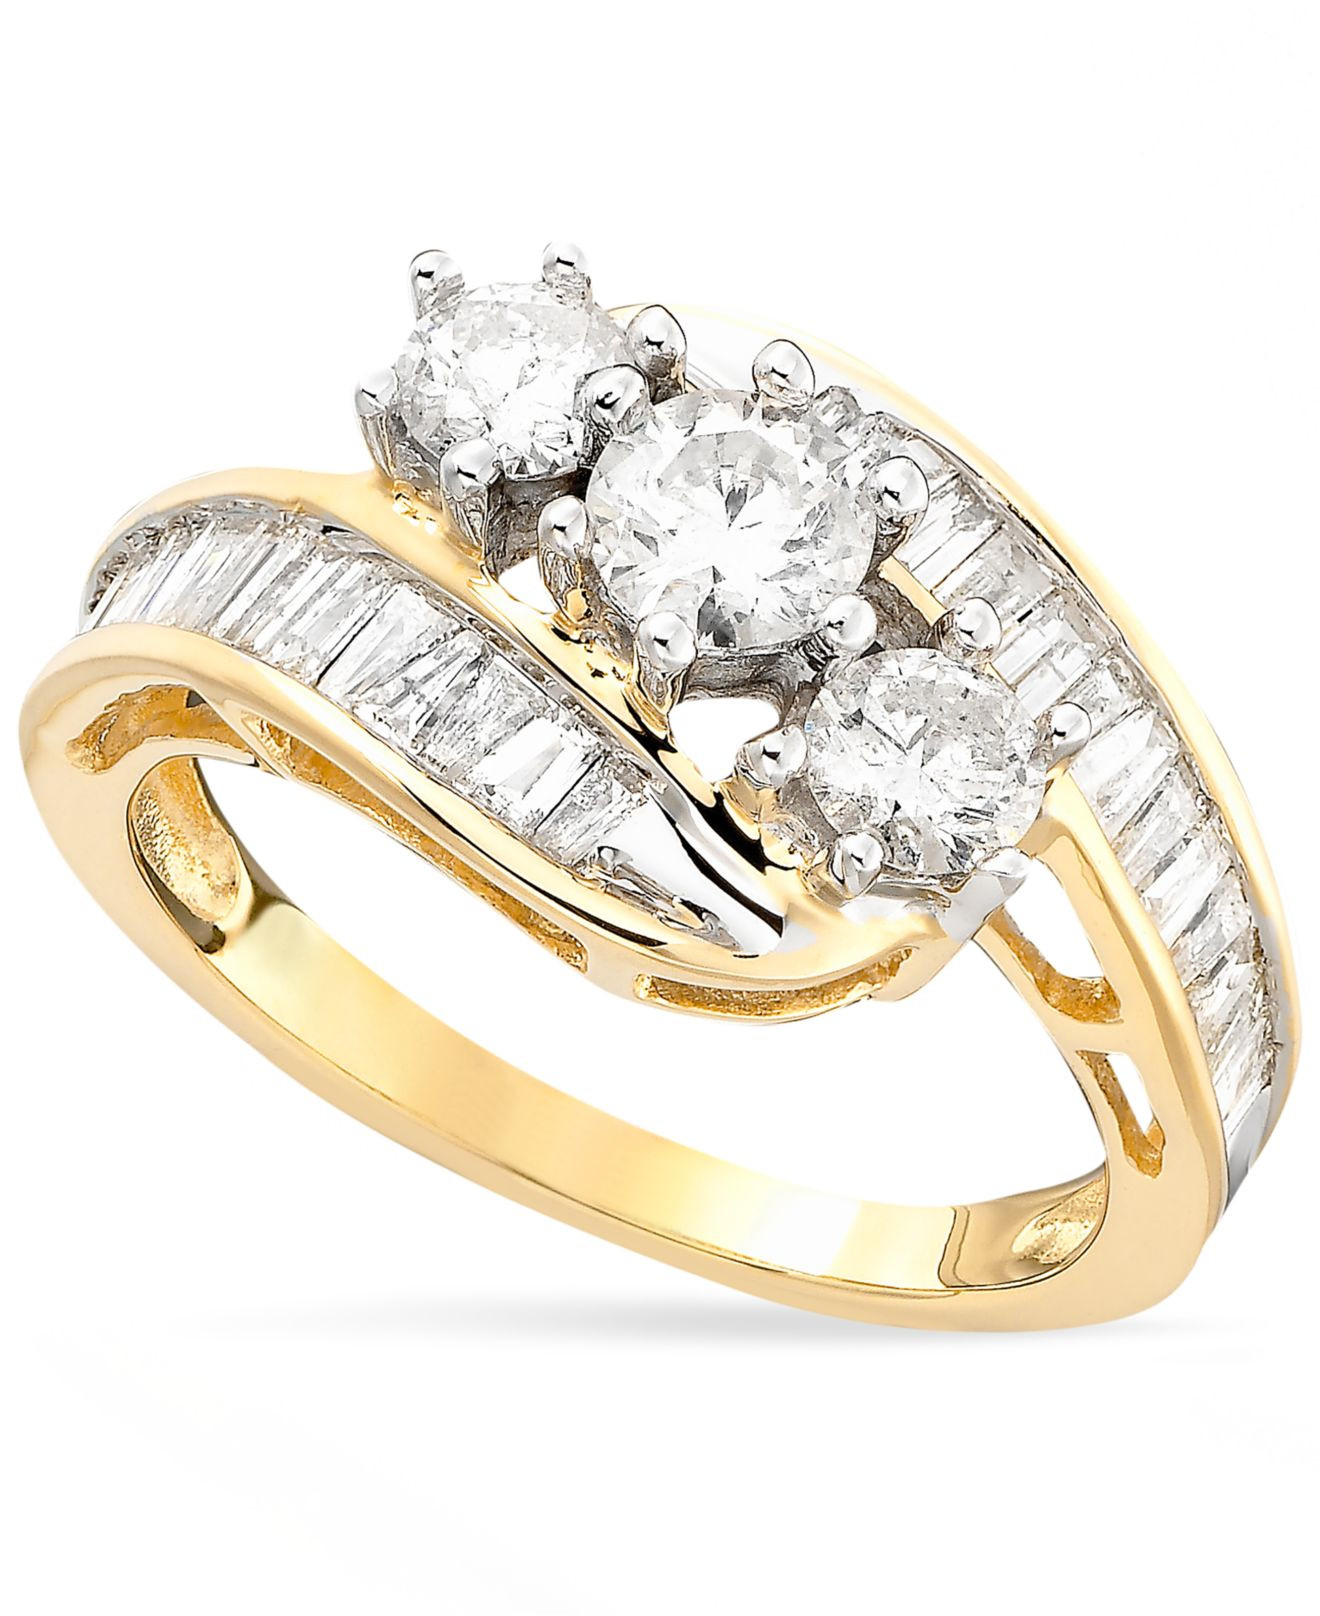 Macys Diamond Rings
 Macy s Us Diamond Bypass Ring In 14K Gold 1 1 2 Ct T W